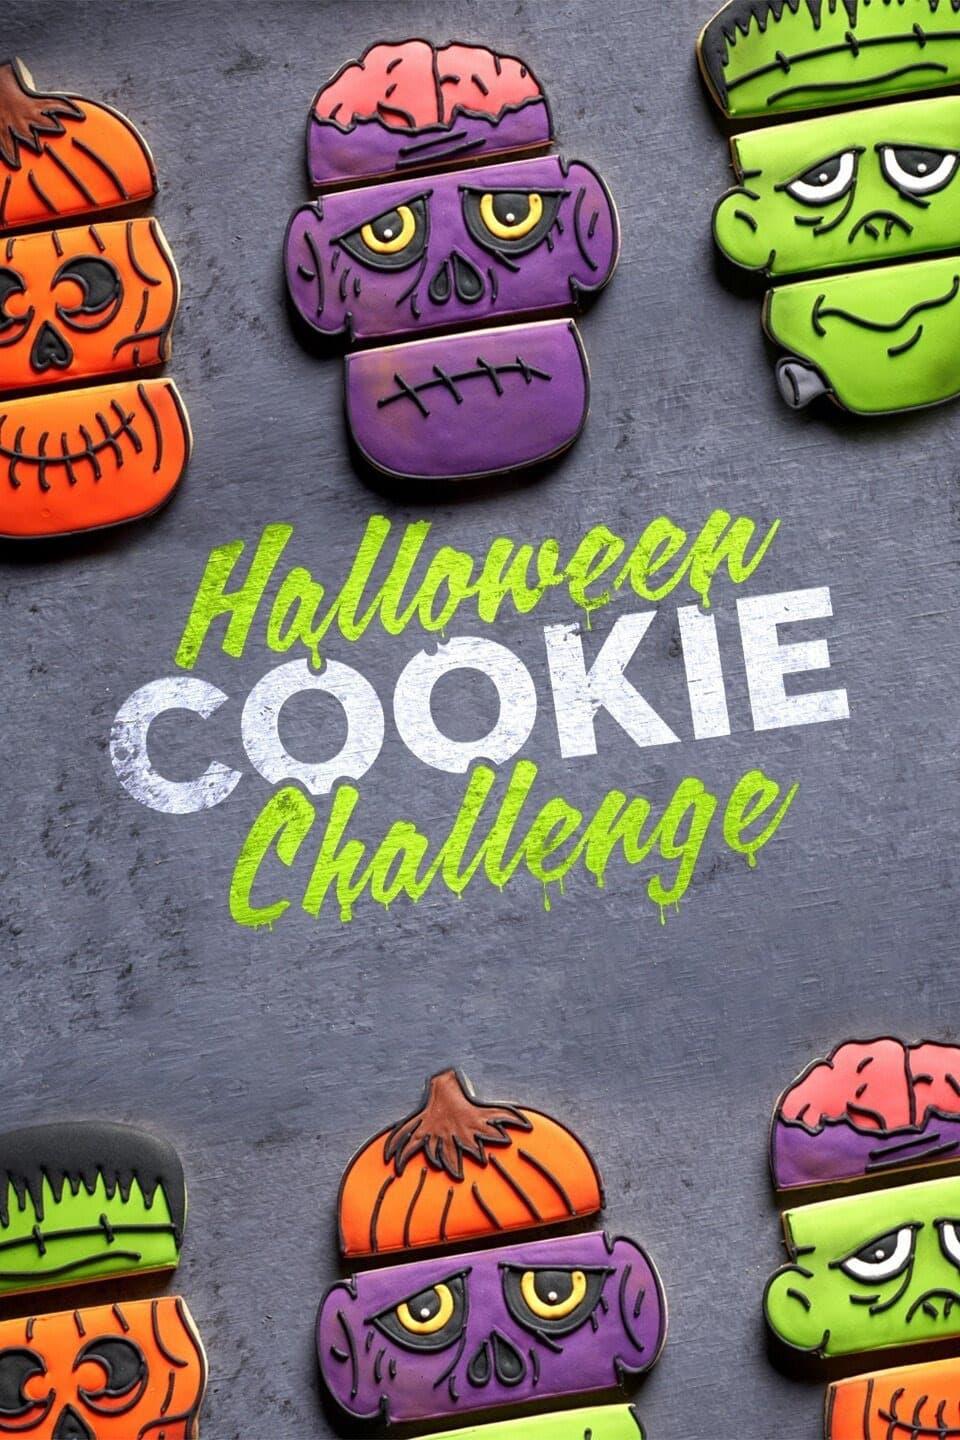 TV ratings for Halloween Cookie Challenge in Norway. Food Network TV series